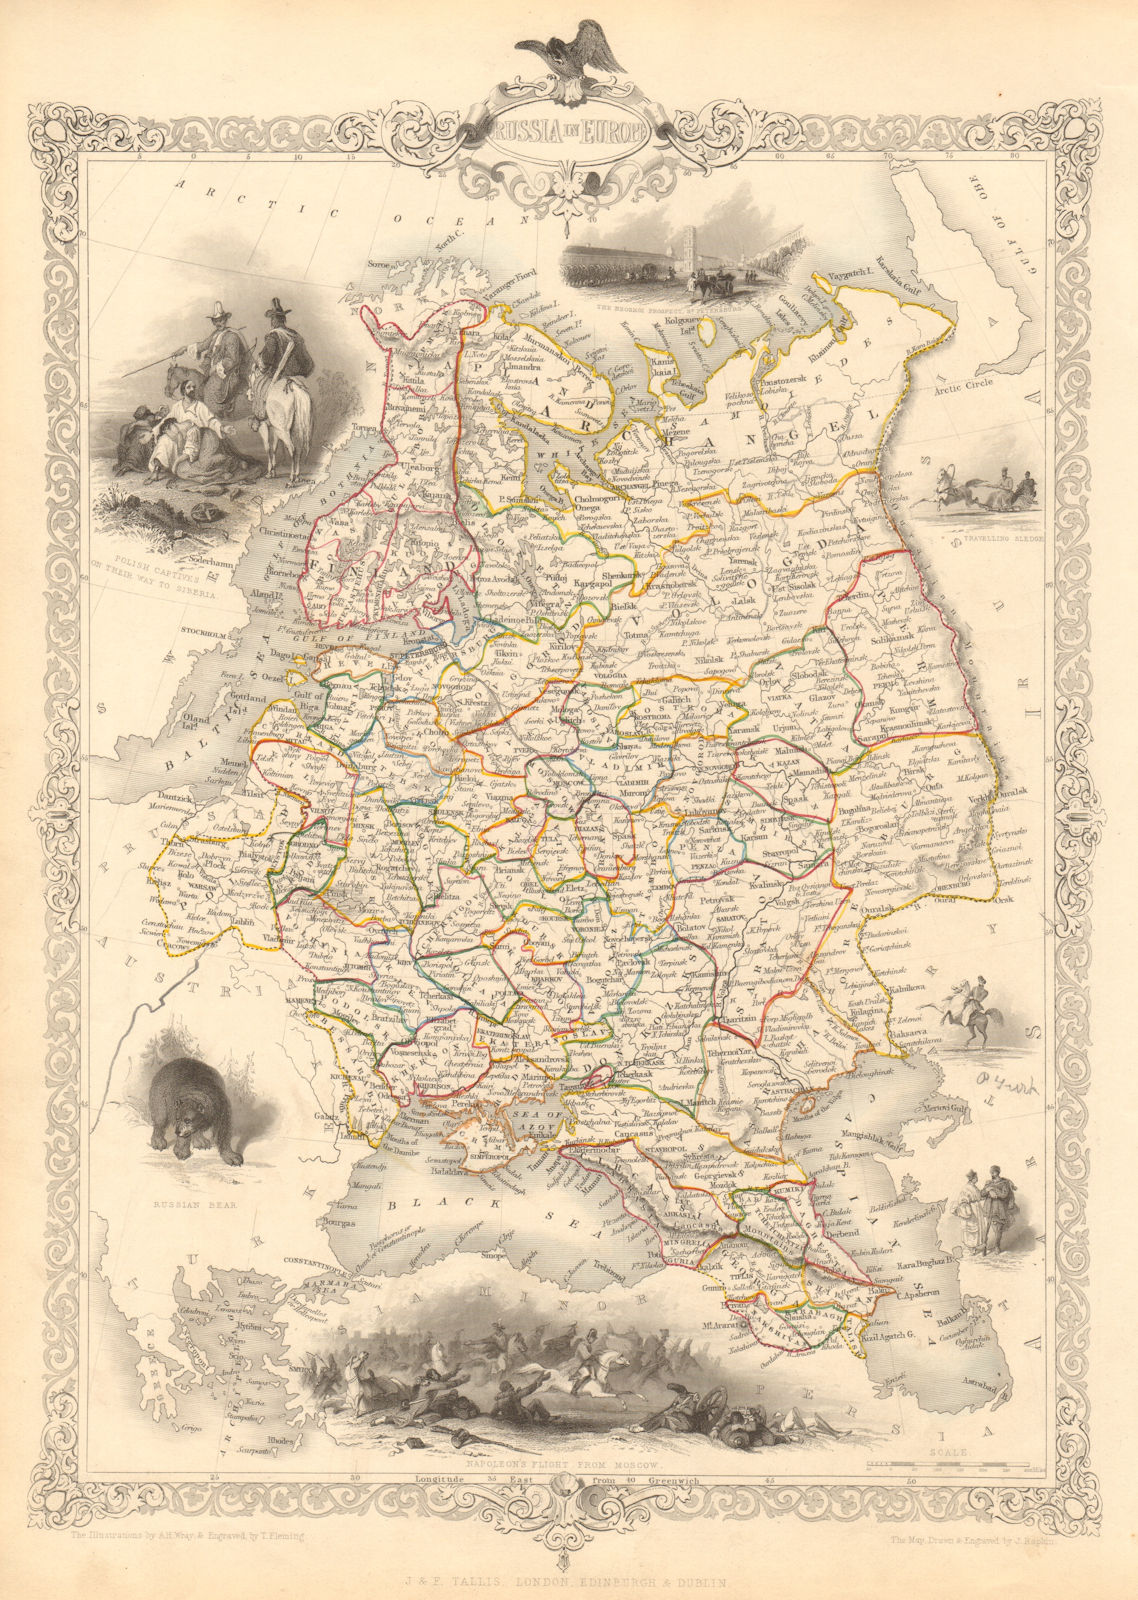 RUSSIA IN EUROPE. Oblasts.Ukraine Baltics Finland Poland. RAPKIN/TALLIS 1851 map